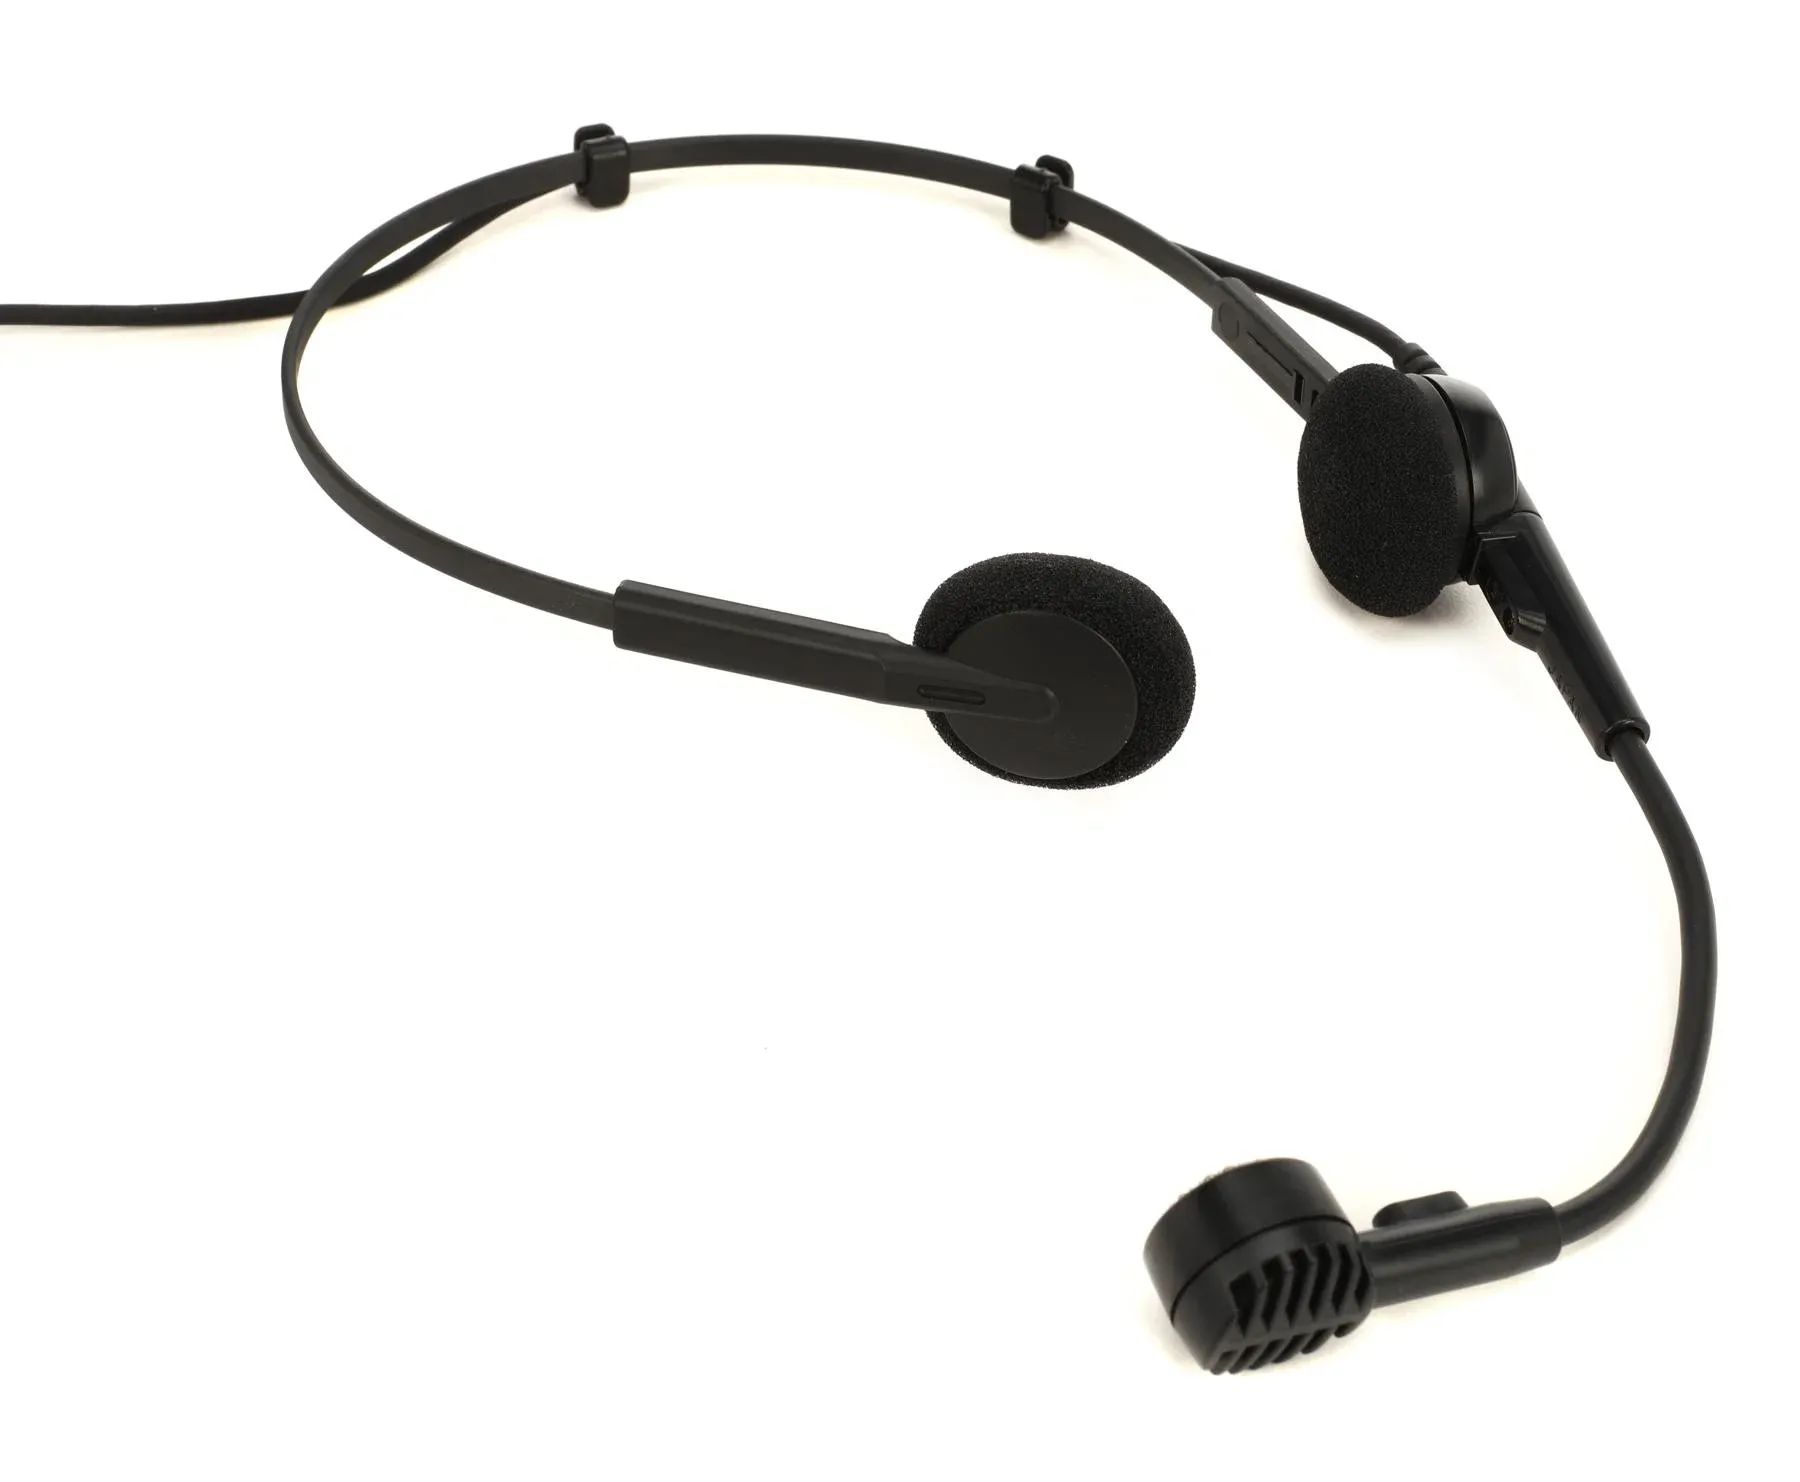 Headset микрофон. Audio-Technica pro8hex. Микрофон Headset 31. “Headset Microphone” (Halaman 22). Хедсет микрофон.